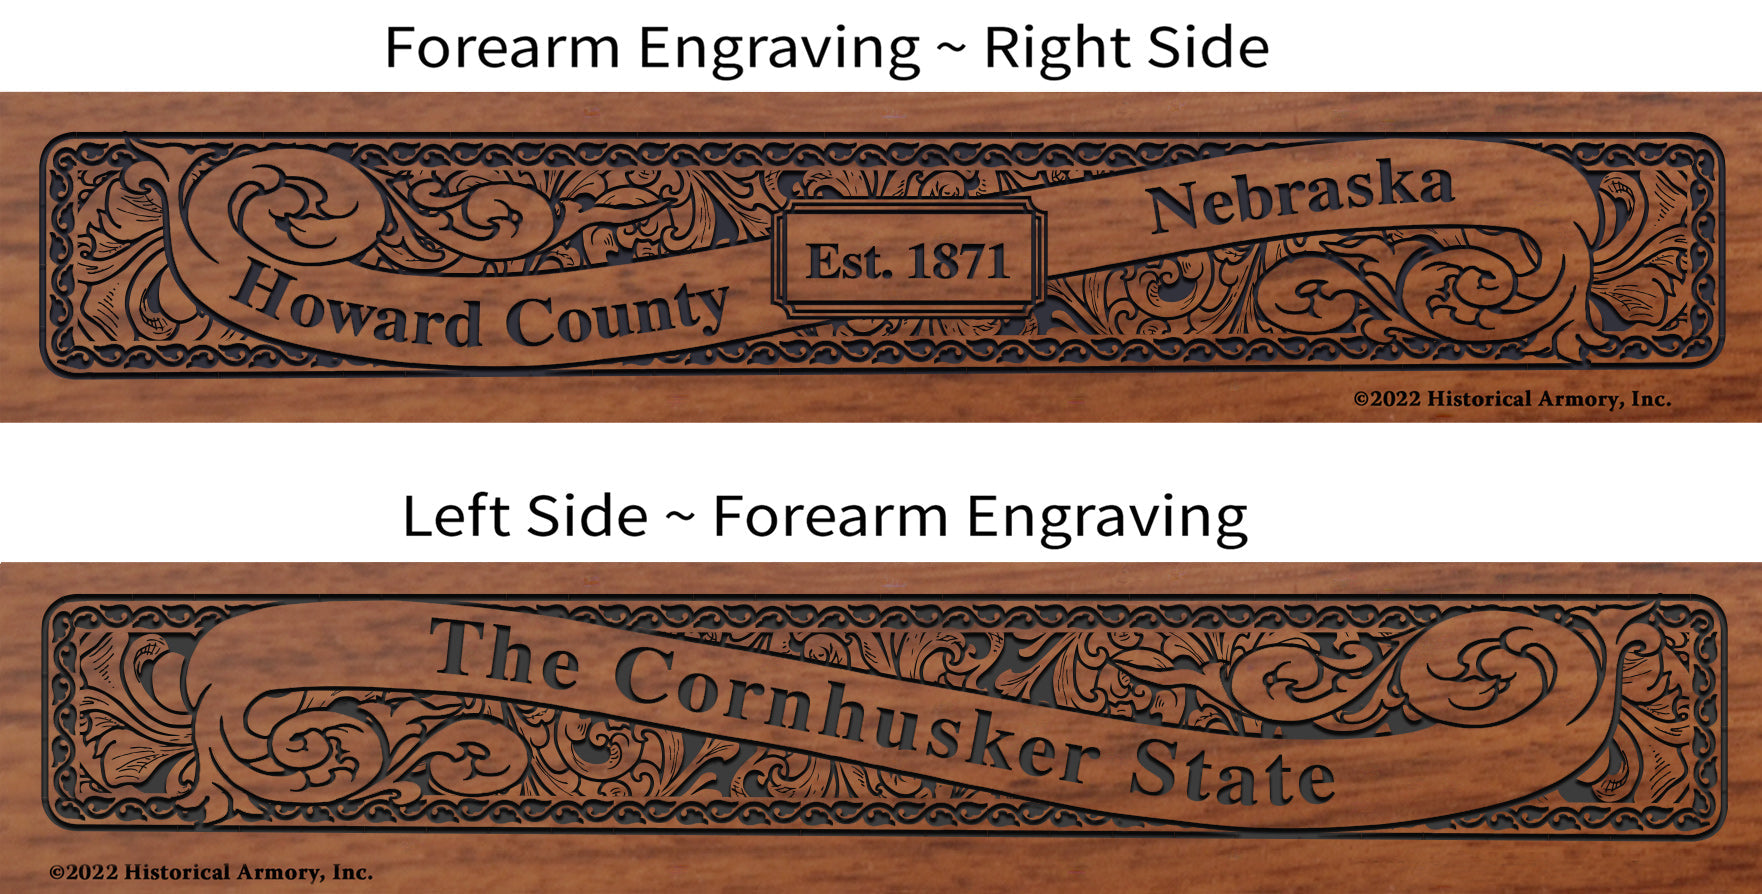 Howard County Nebraska Engraved Rifle Forearm